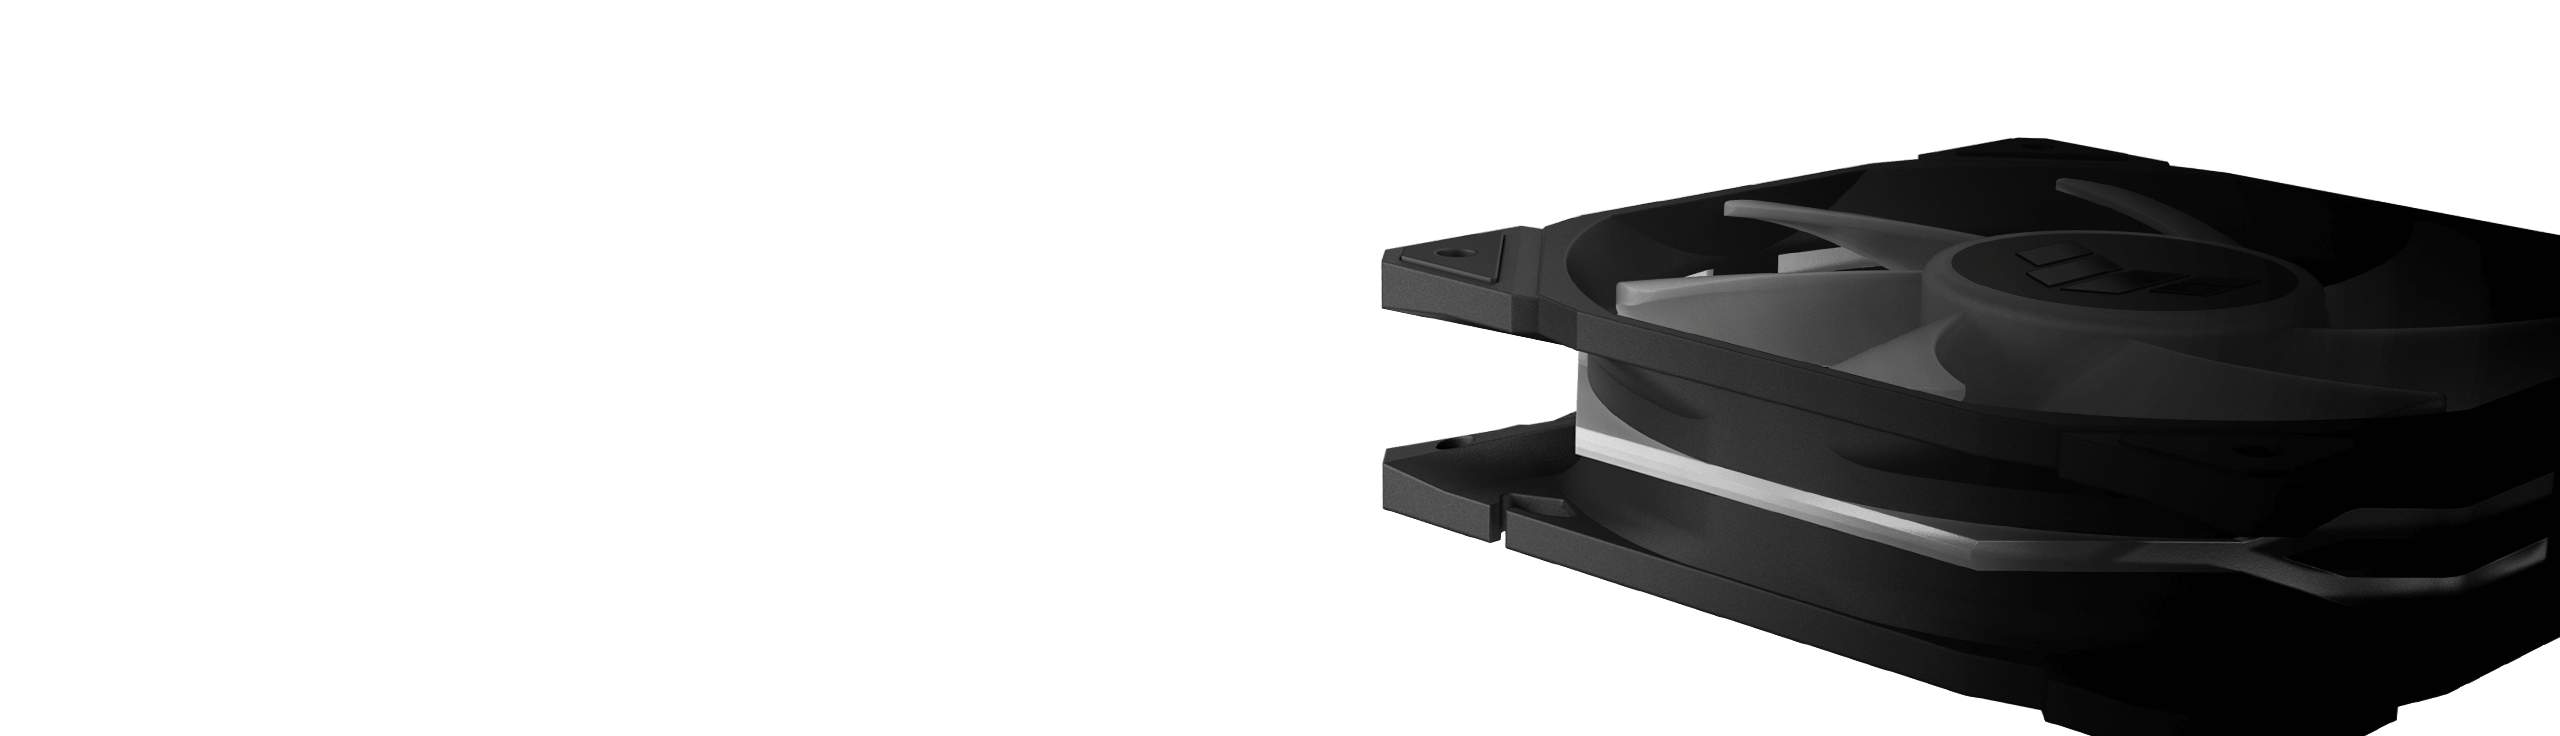 ASUS TUF Gaming TR120 ARGB 反向風扇的額外厚度28毫米風扇框架與其他25毫米風扇框架進行比較。